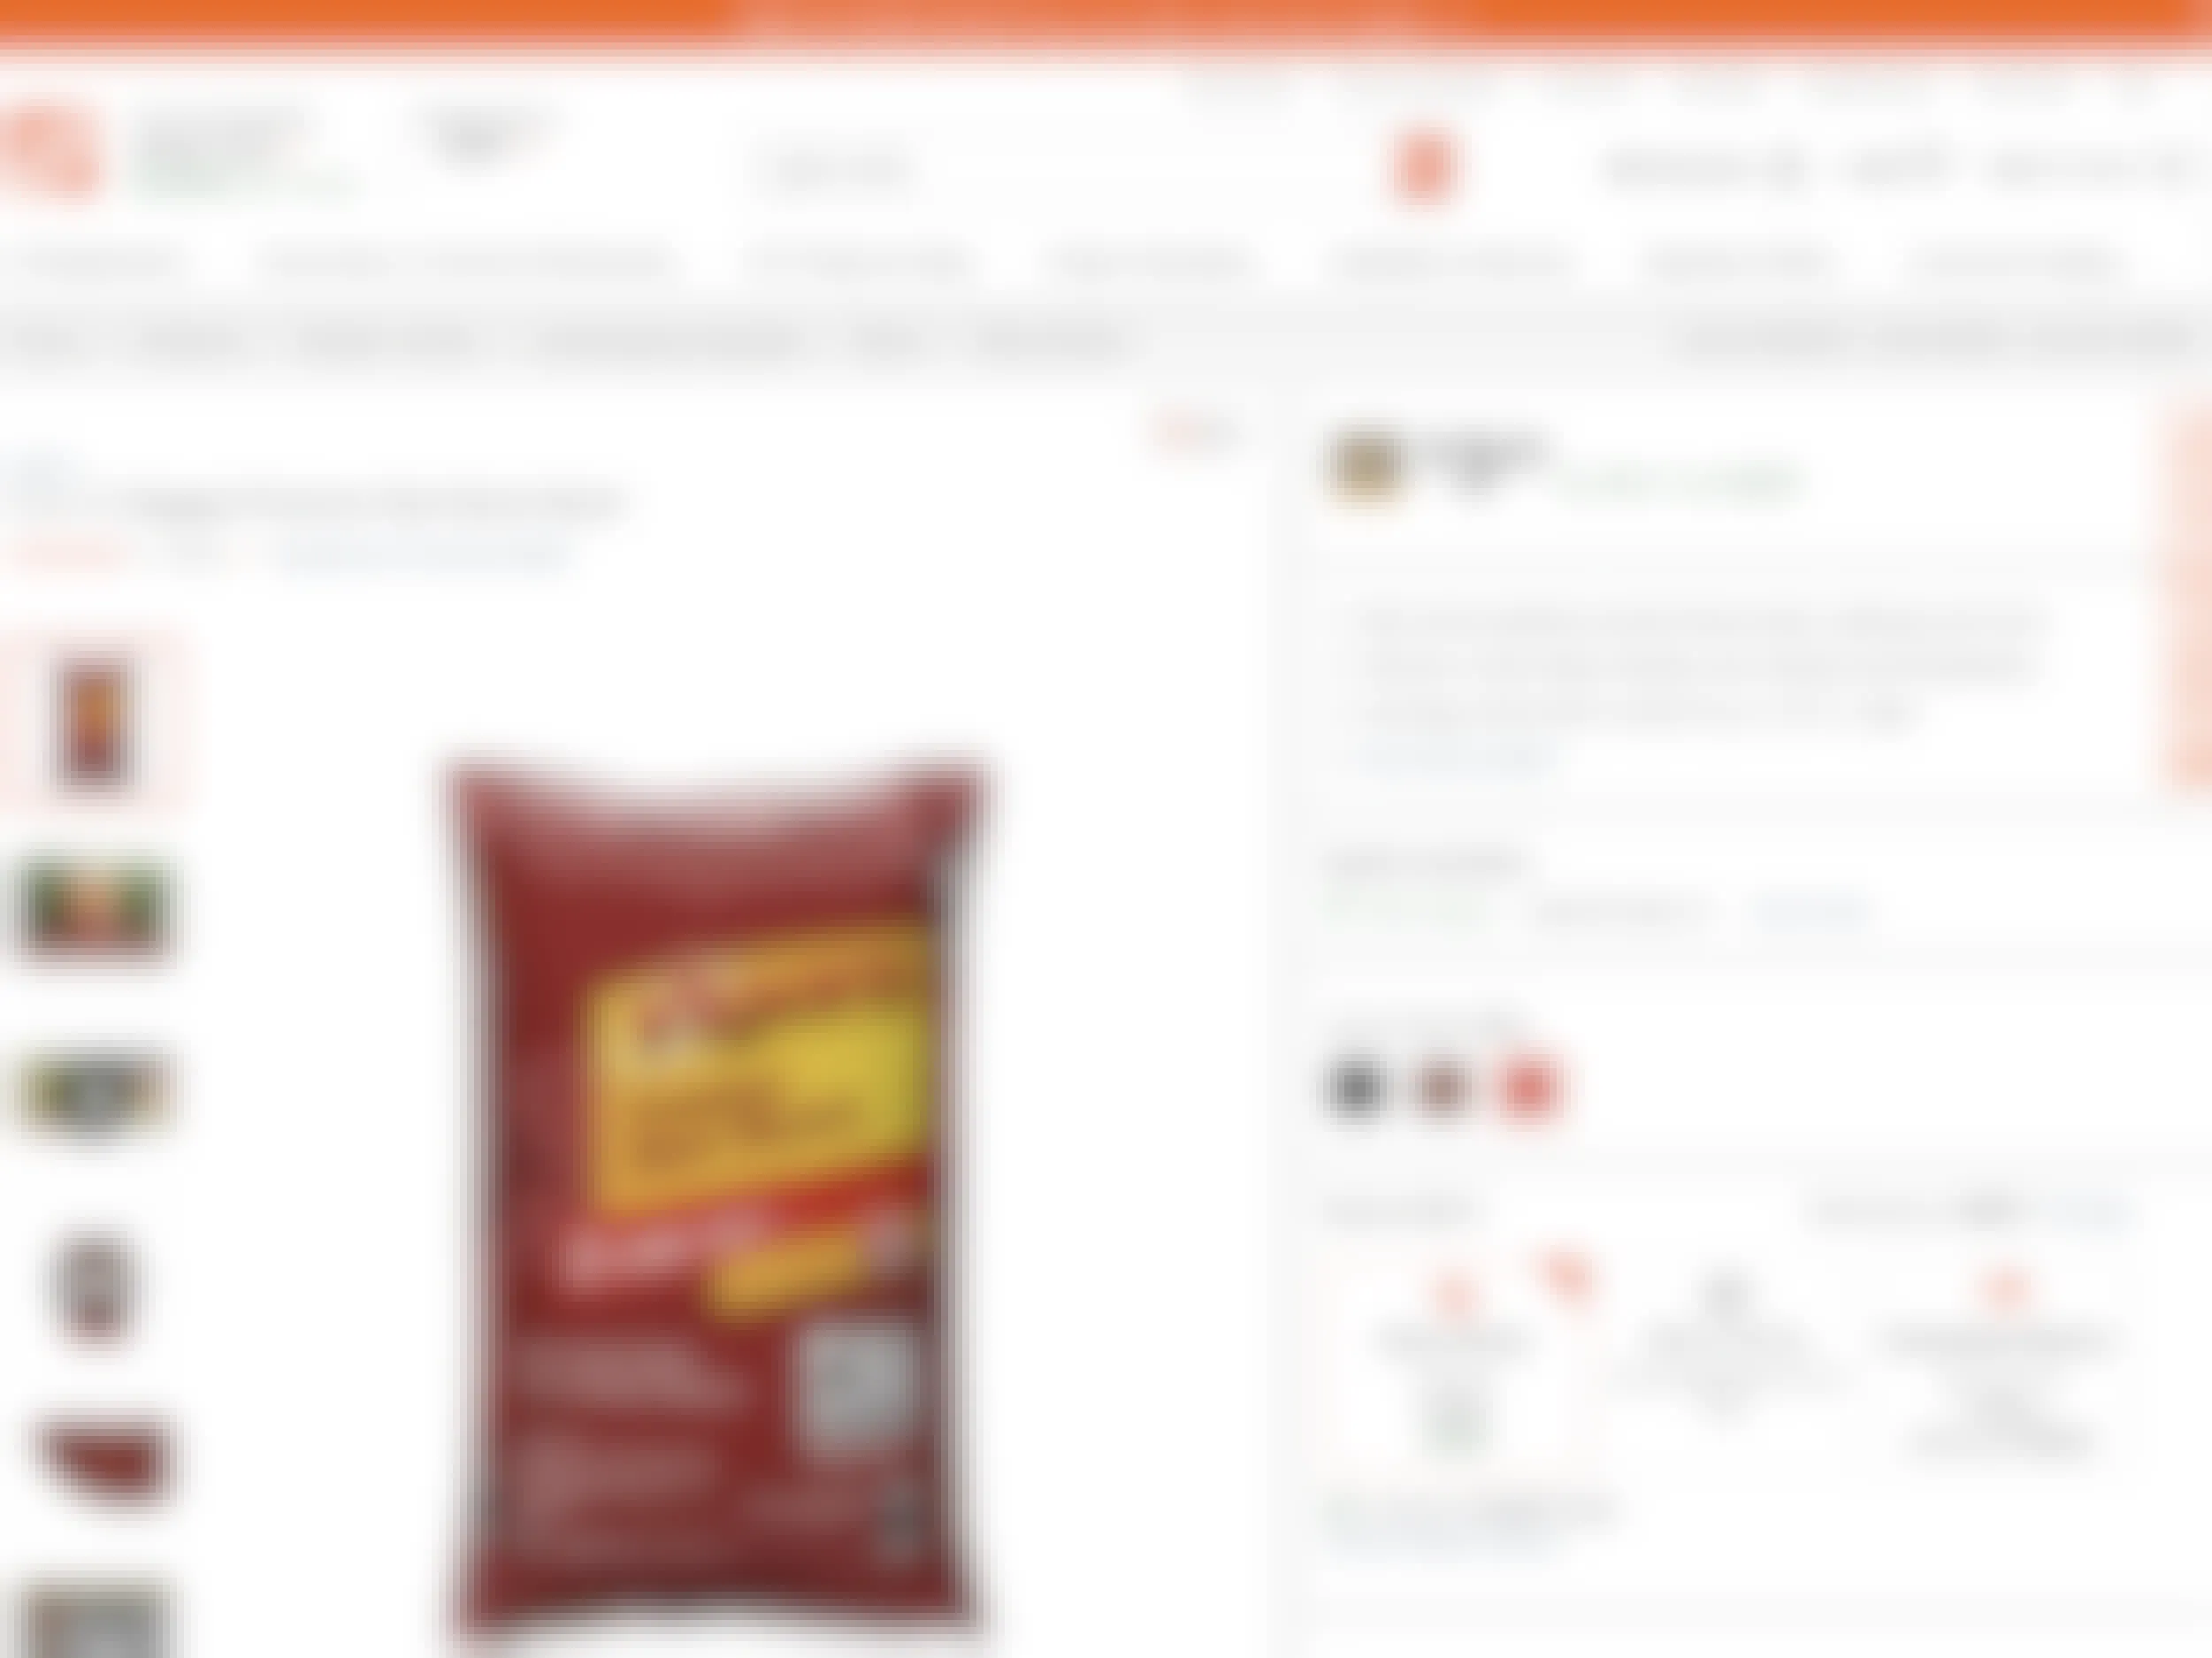 Screenshot showing a "buy in bulk" discount on Vigoro mulch from Home Depot